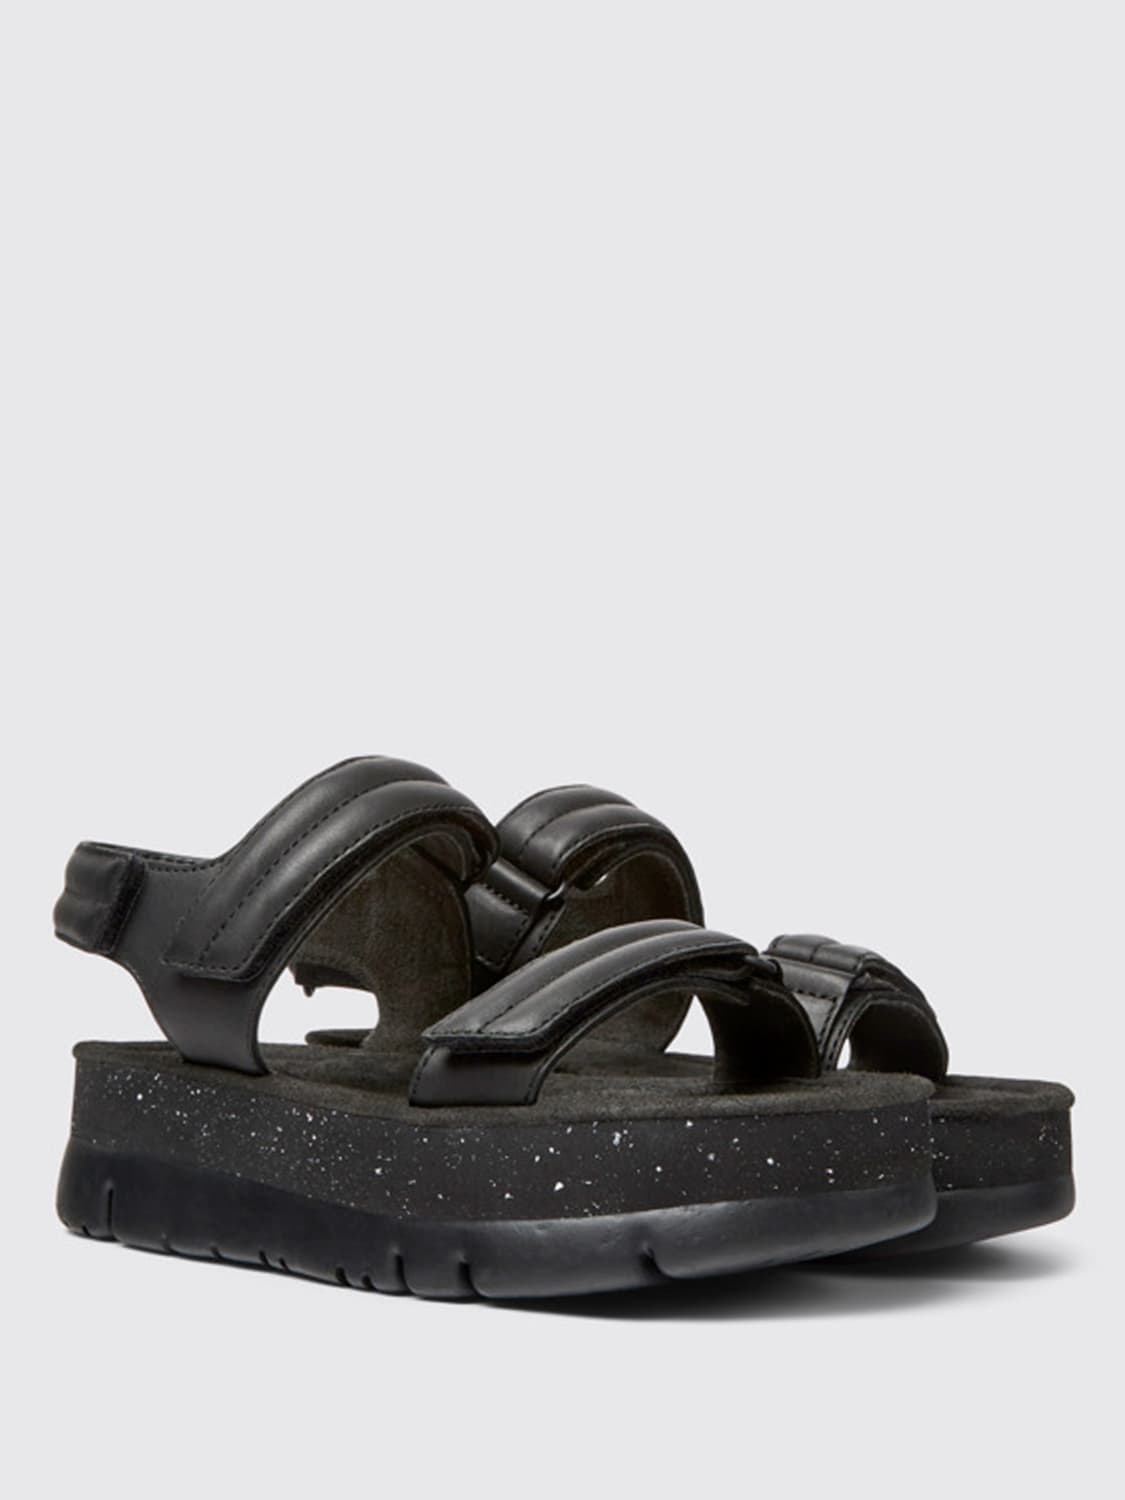 CAMPER: Oruga Up sandals in leather - Black | Camper flat sandals ...